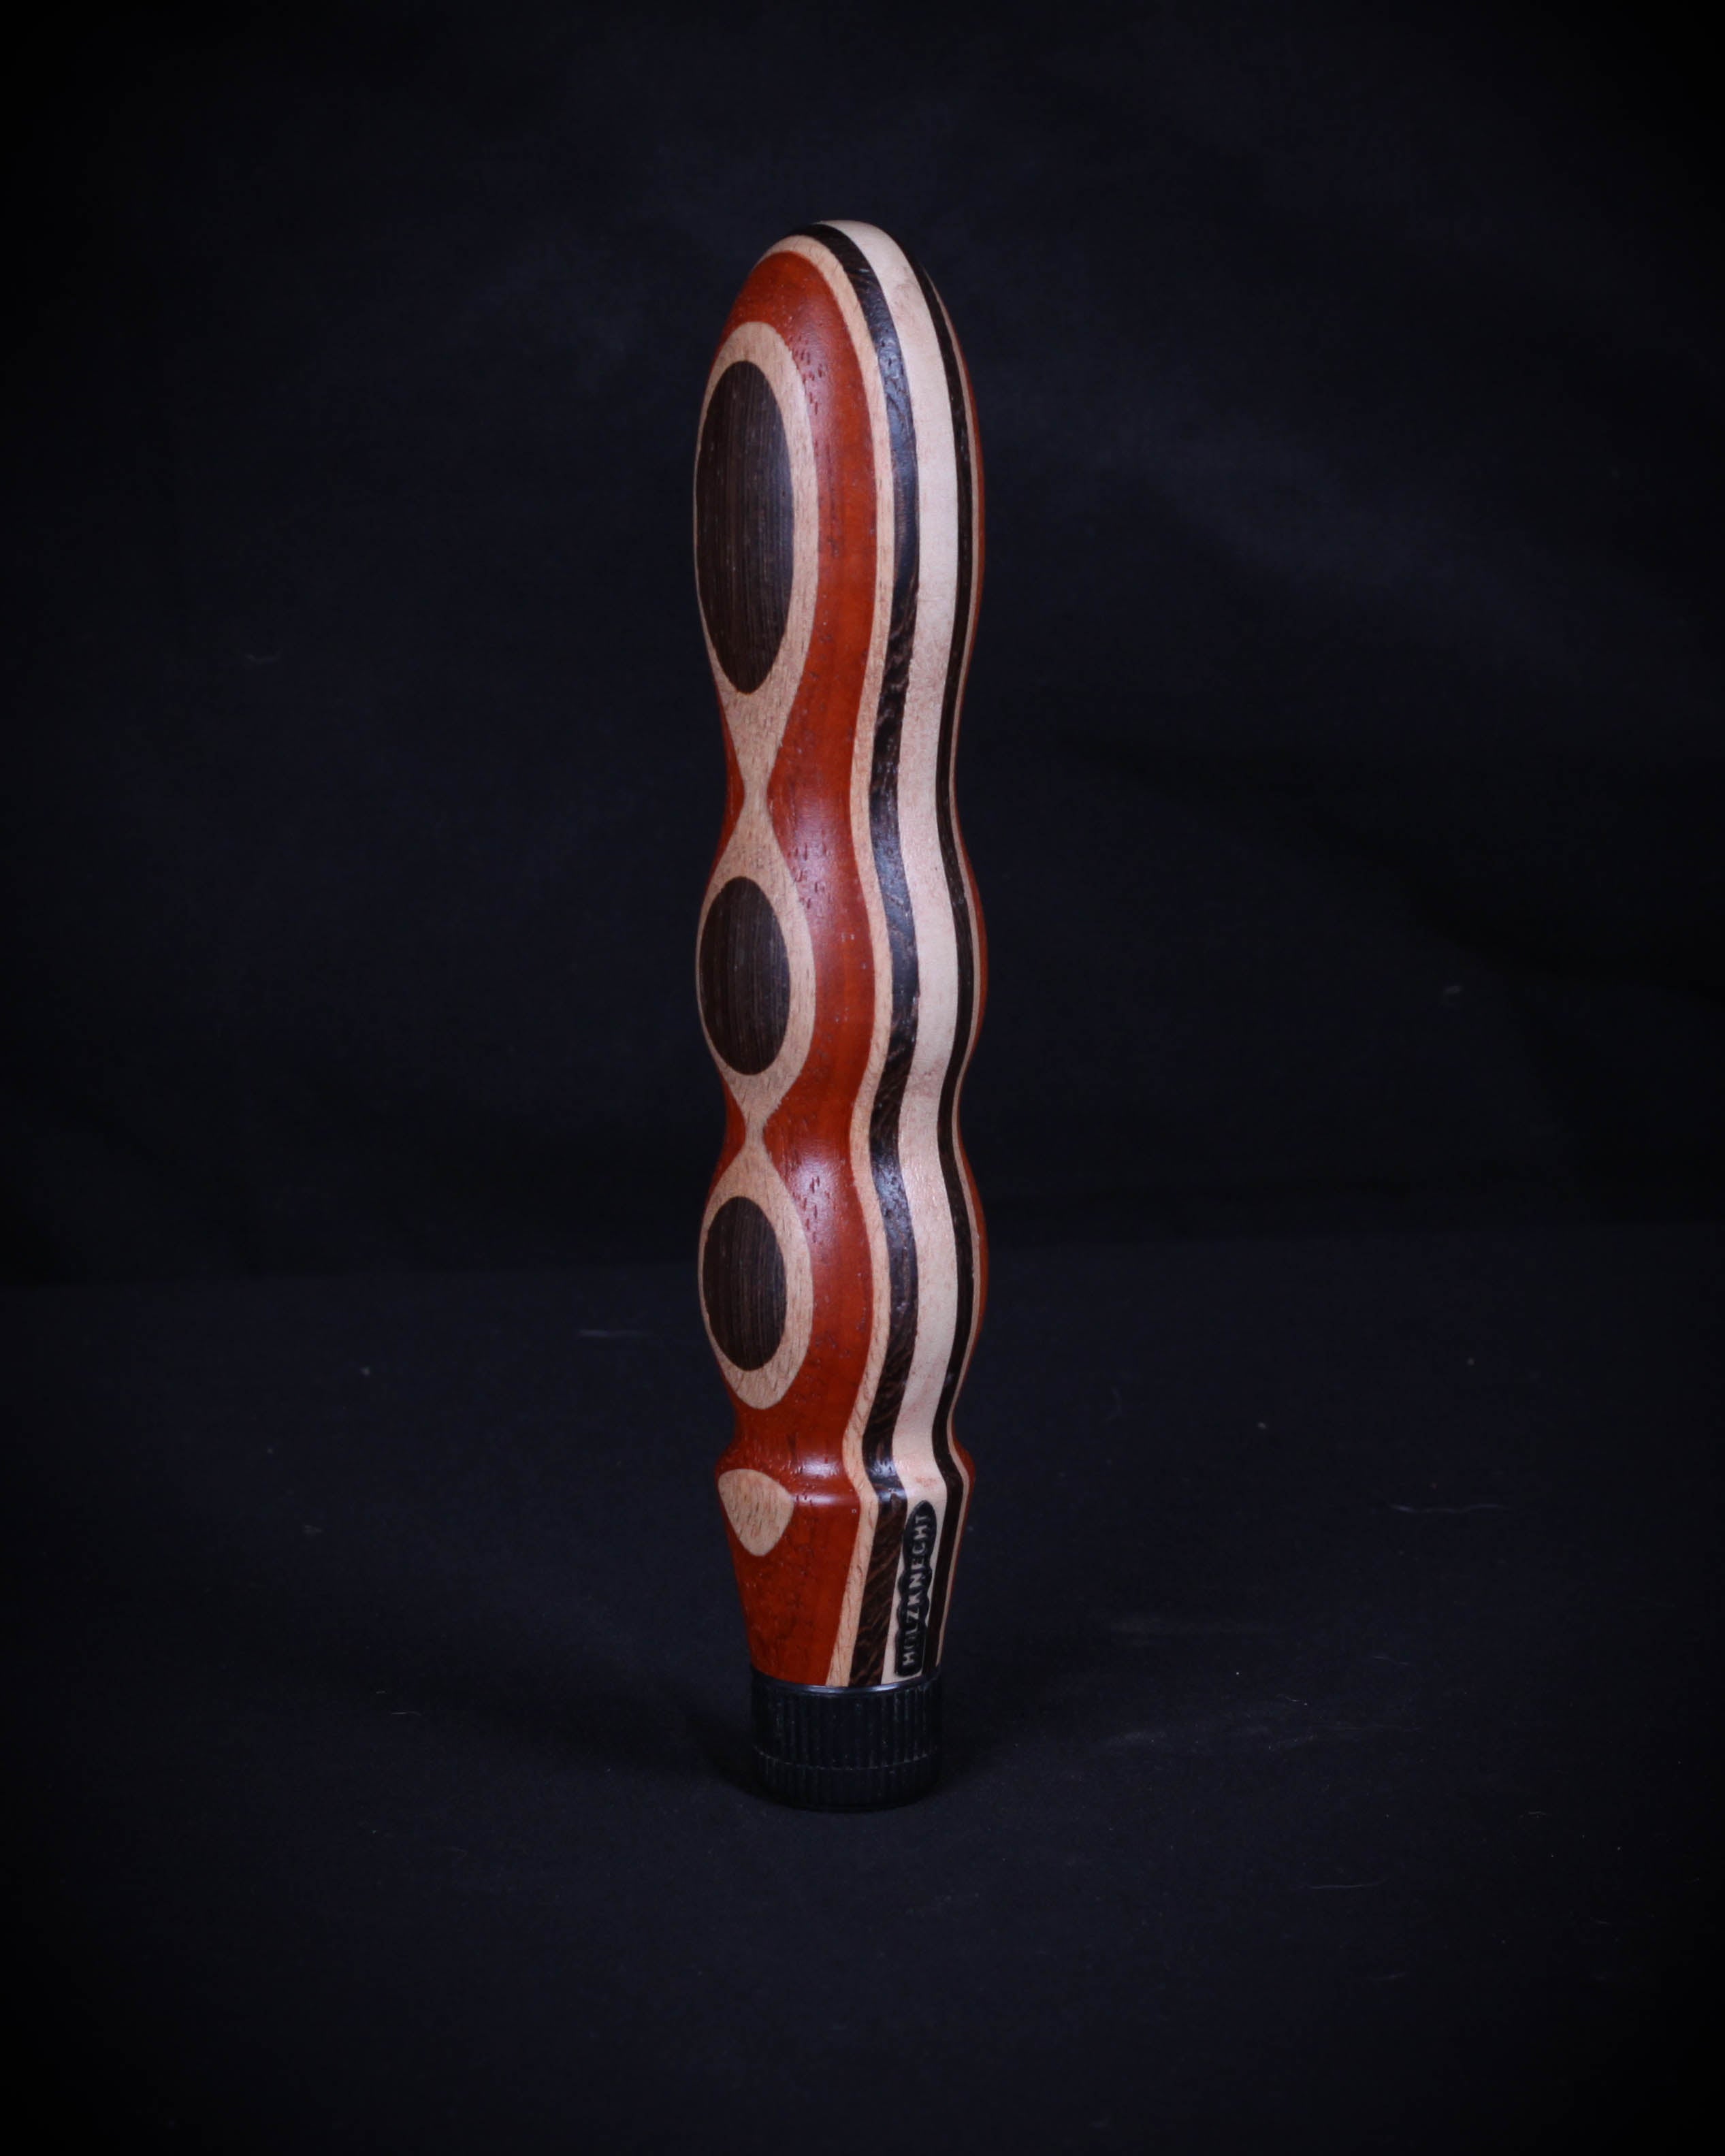 STROLCHI || Color || Holzvibrator || Holzdildo || Sex Toy || Wood Vibrator || handmade by Holz-Knecht.at